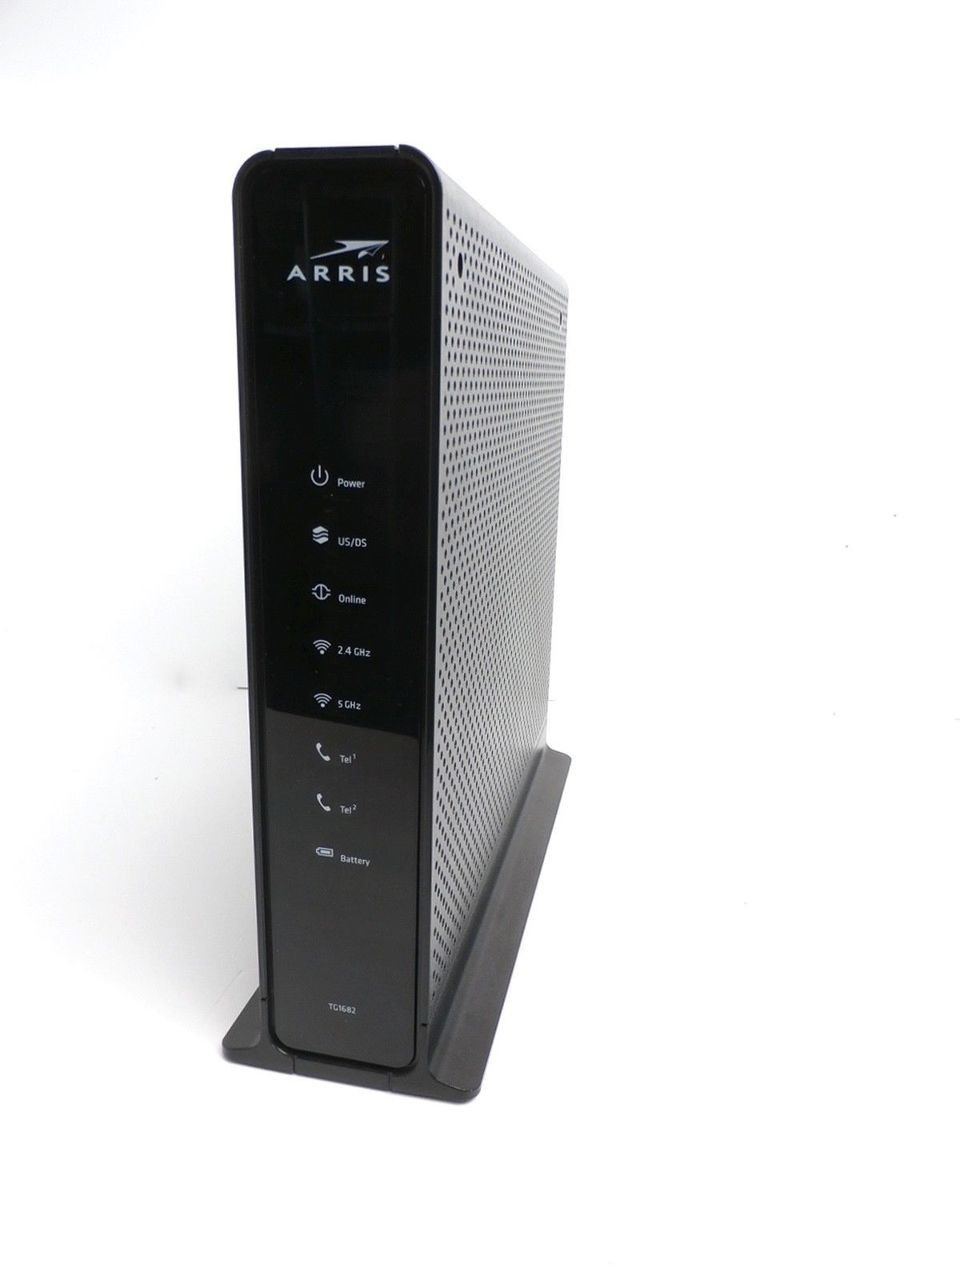 Arris TG1682G Comcast XB3 Wireless Telephone Modem